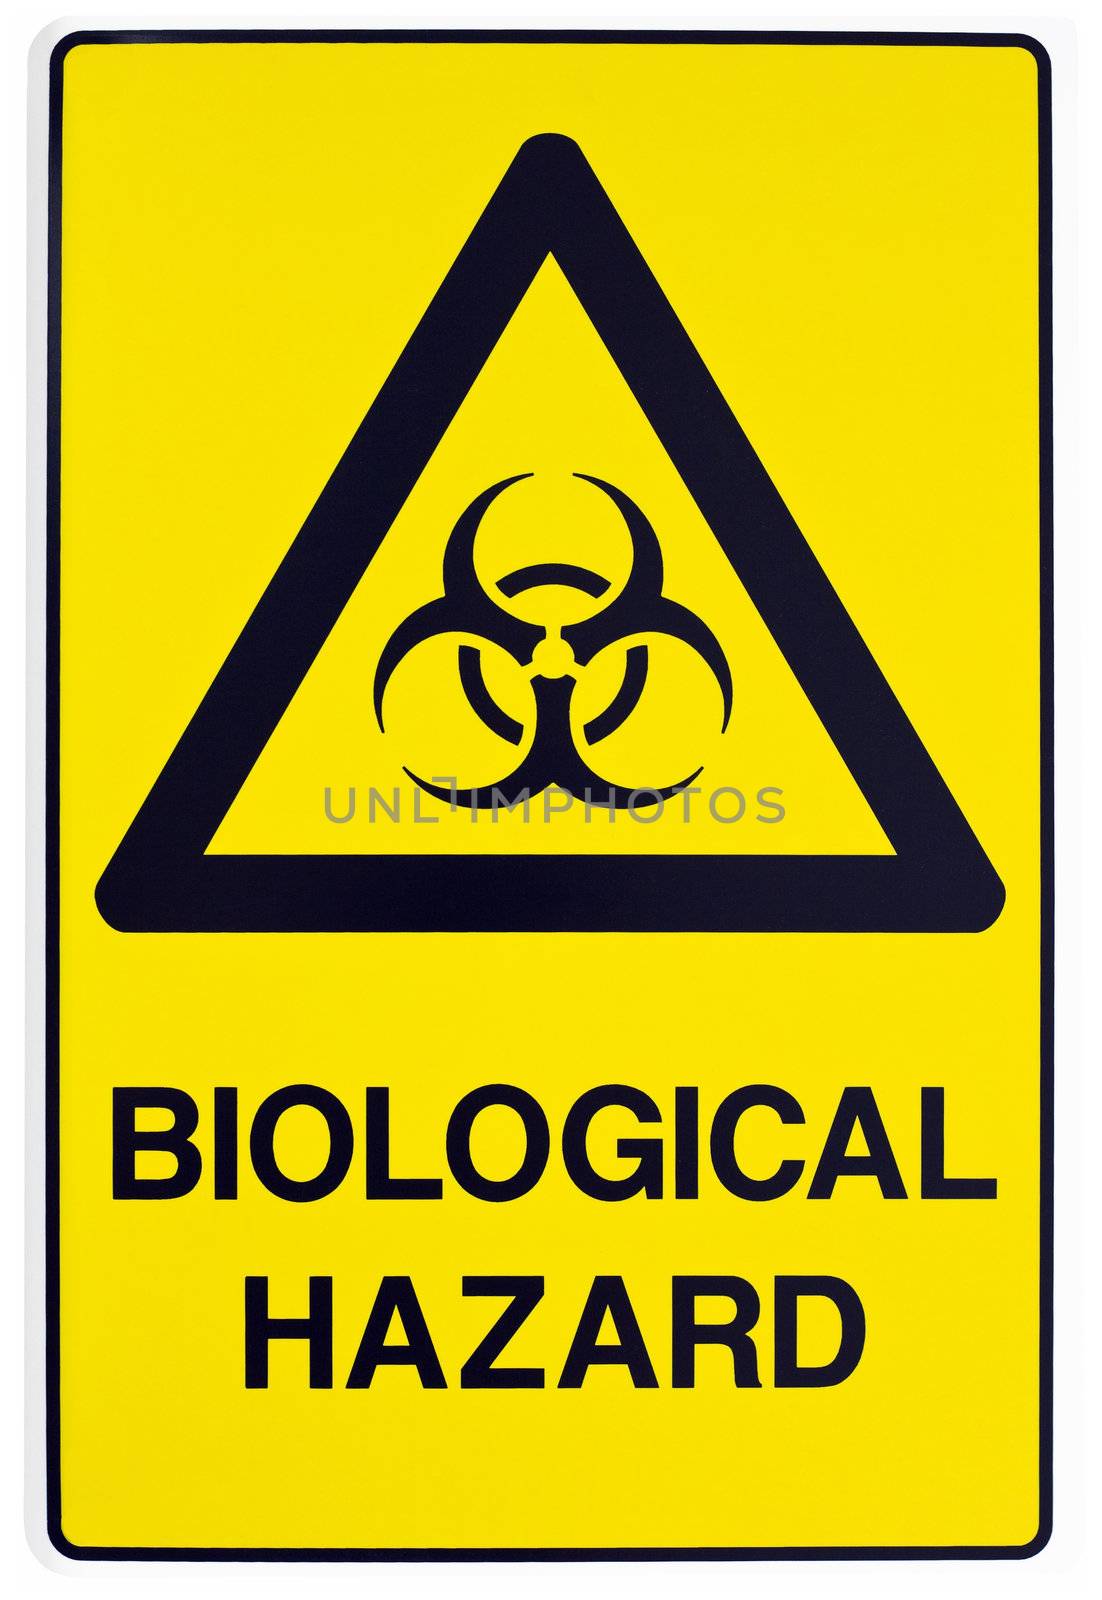 Biological hazard warning sign by Jaykayl